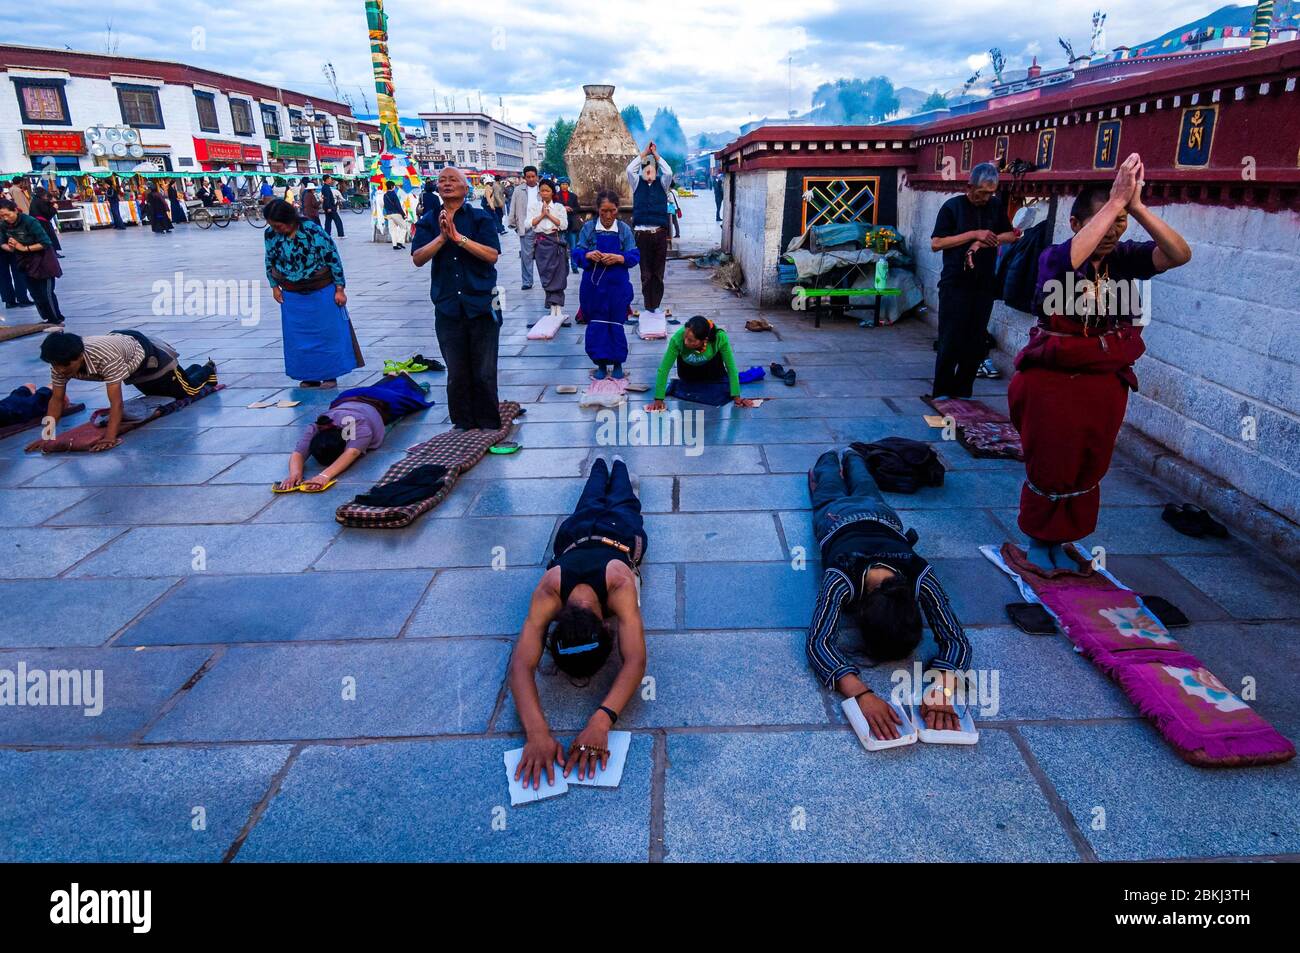 China, Zentraltibet, Ü Tsang, Lhasa, Jokhang-Tempel, Tibets am meisten verehrtes Heiligtum, Menge in Niederwerfung vor dem Eingang Stockfoto